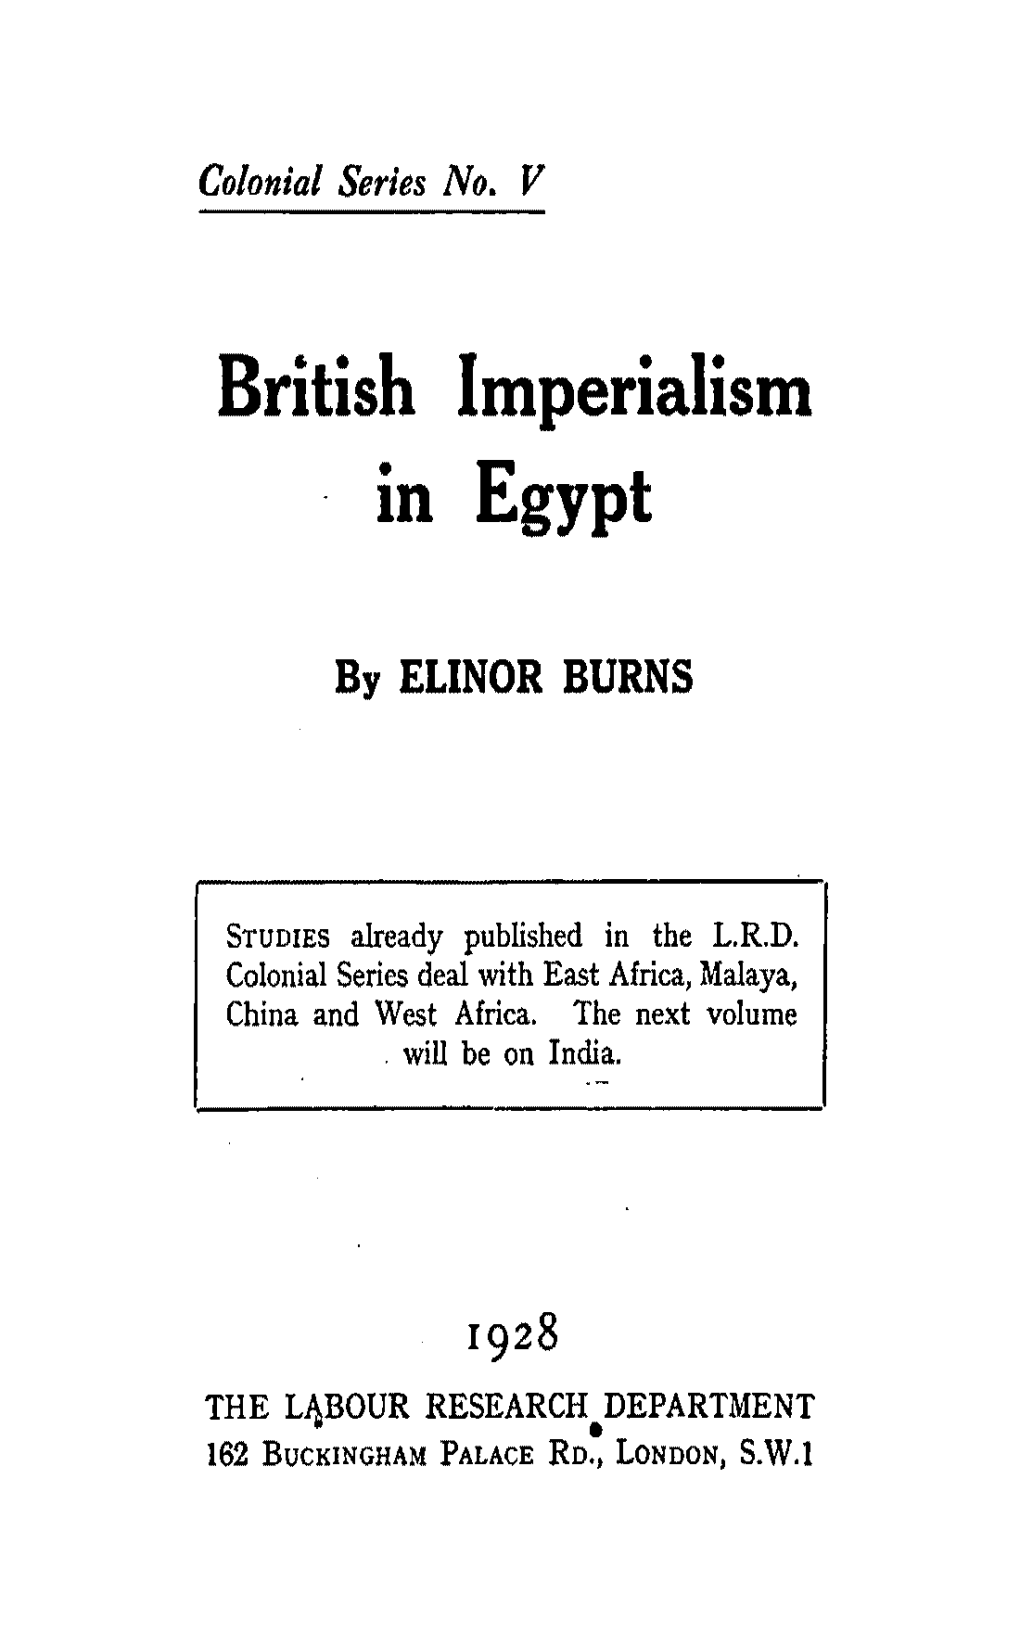 British Imperialism in Egypt